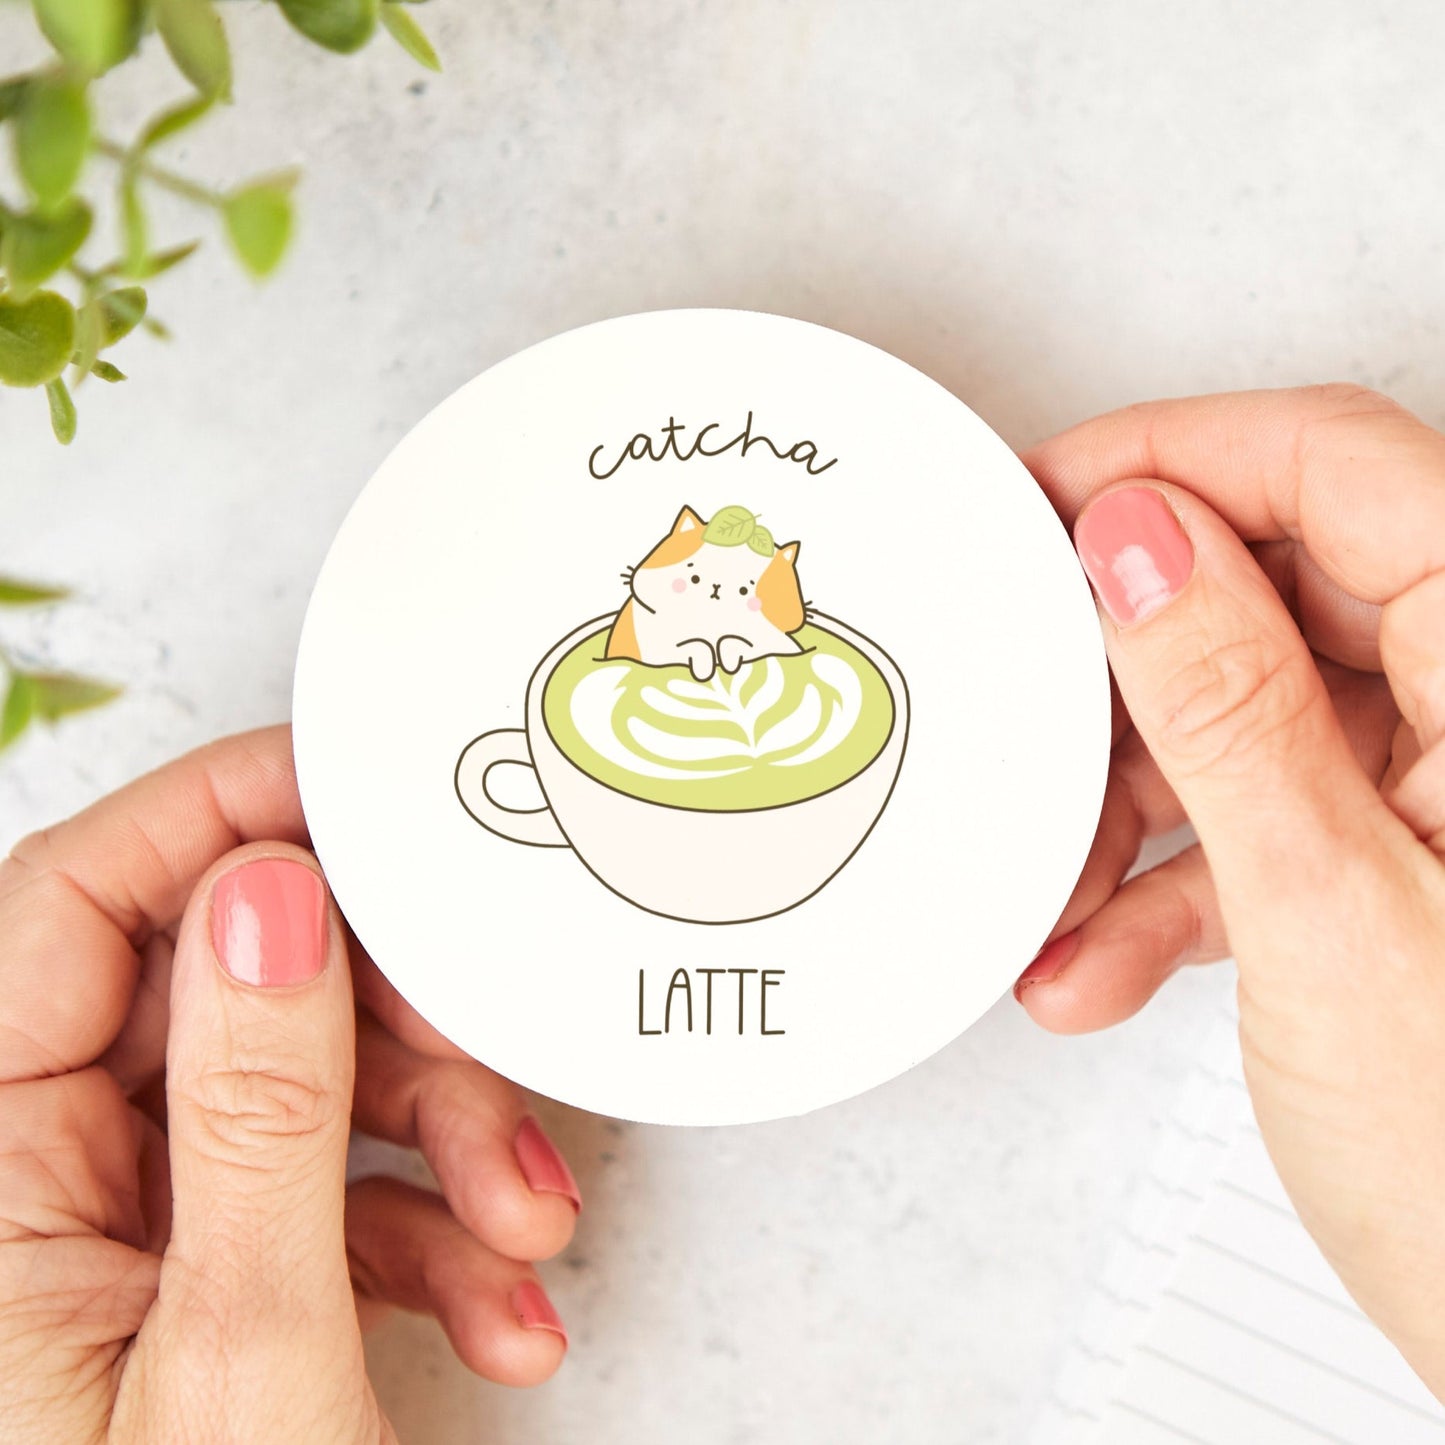 Catcha Latte Coaster